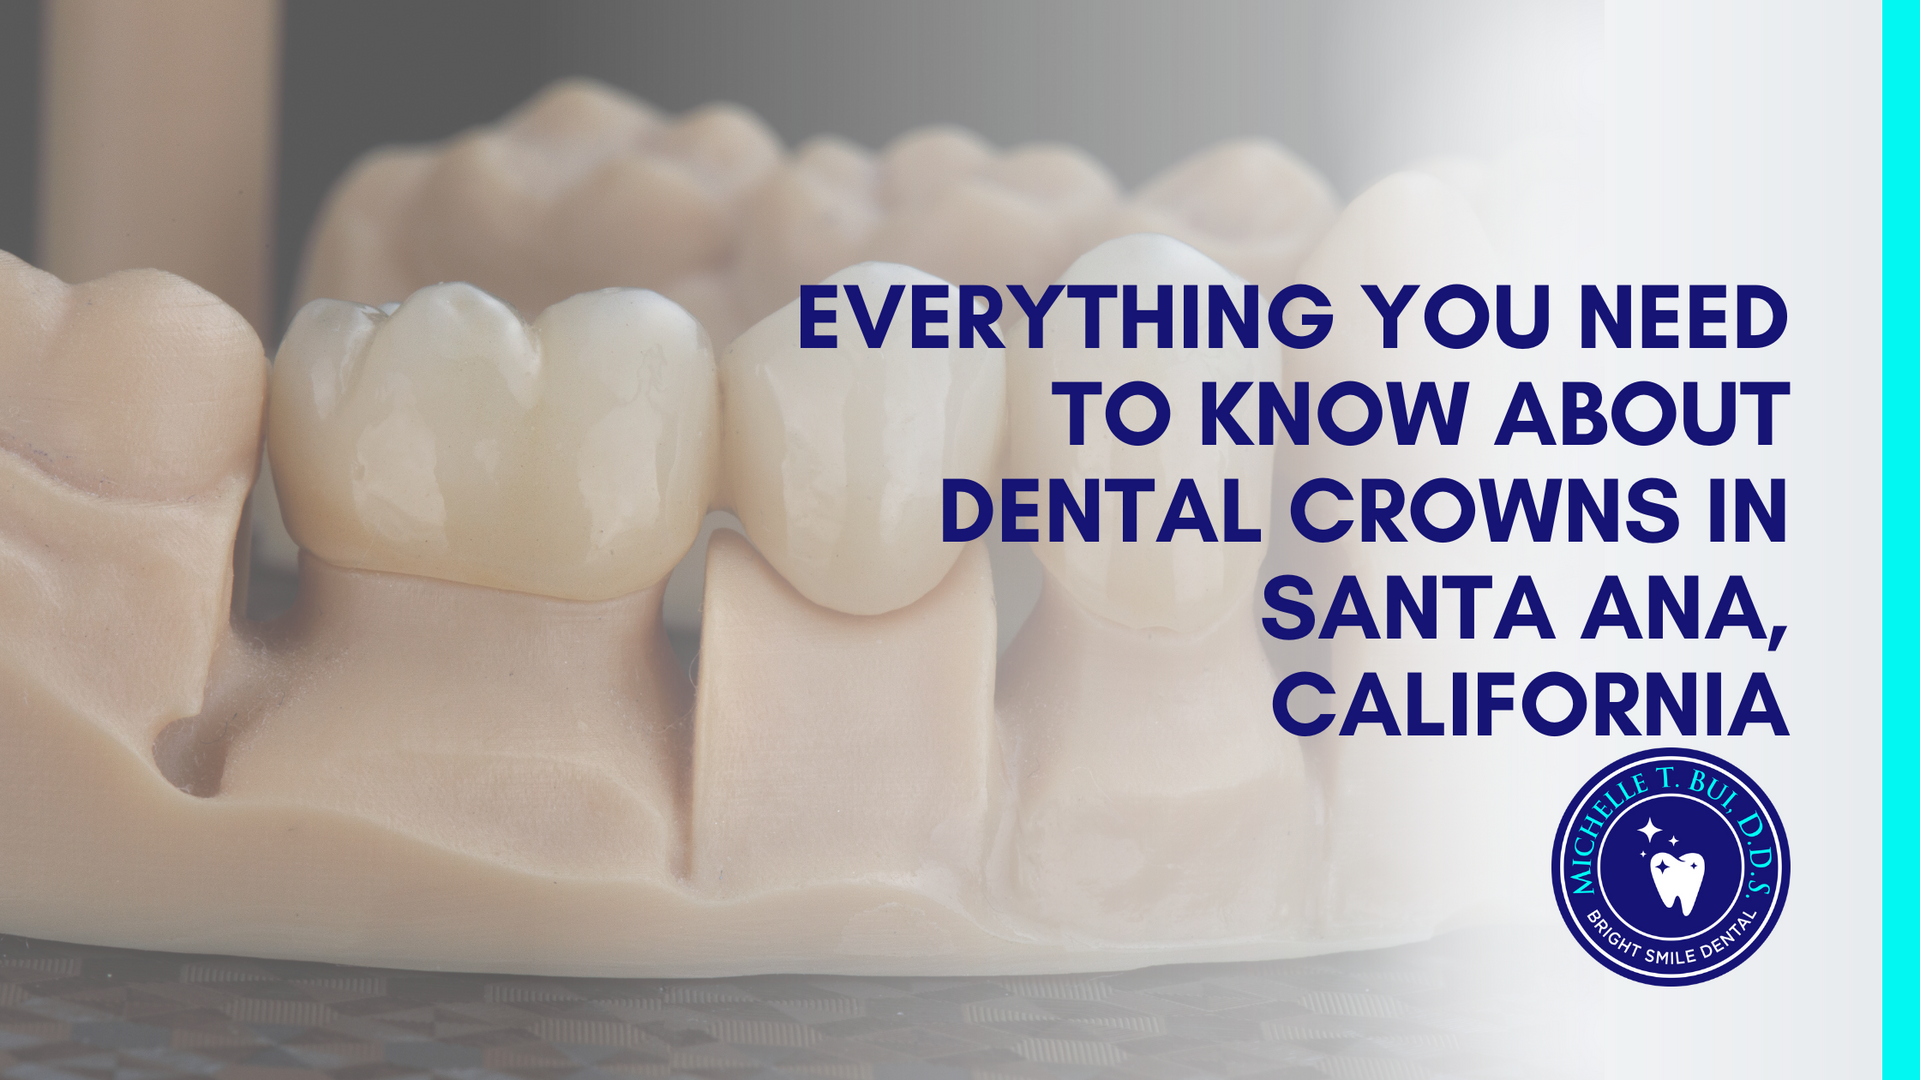 an ad for dental crowns in santa ana california